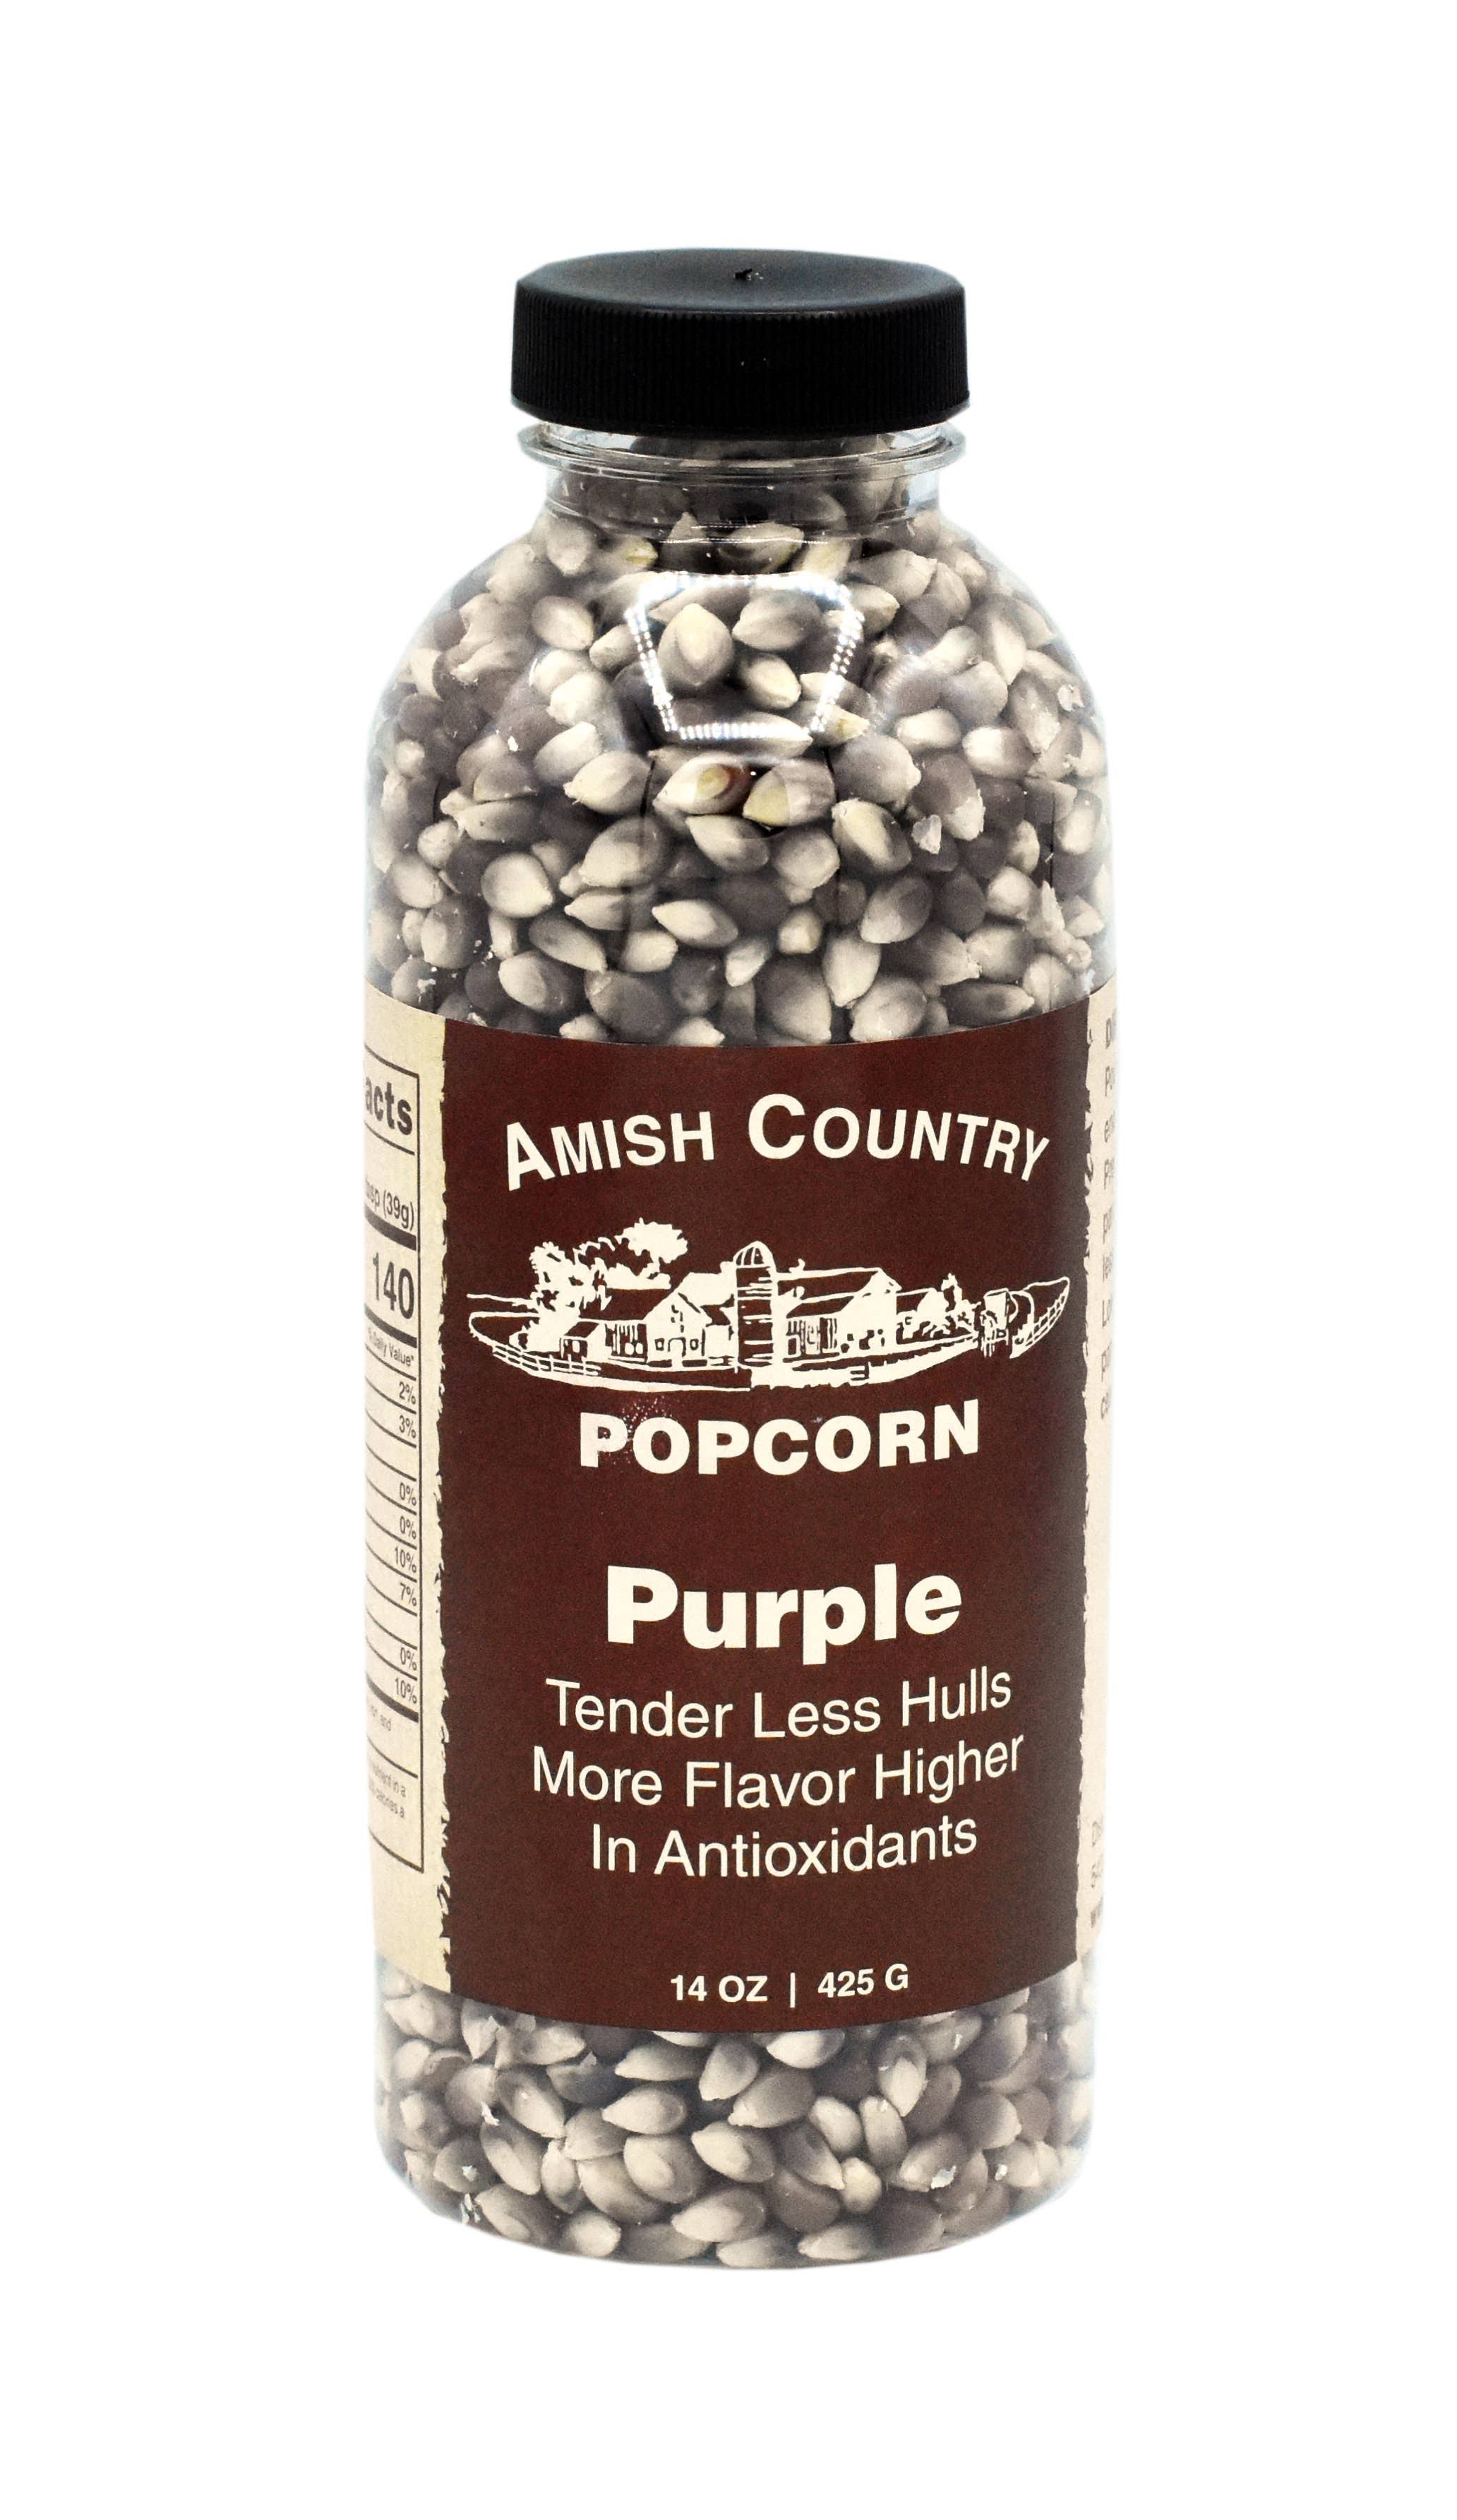 Amish Country Purple Popcorn Bottle, 14 oz